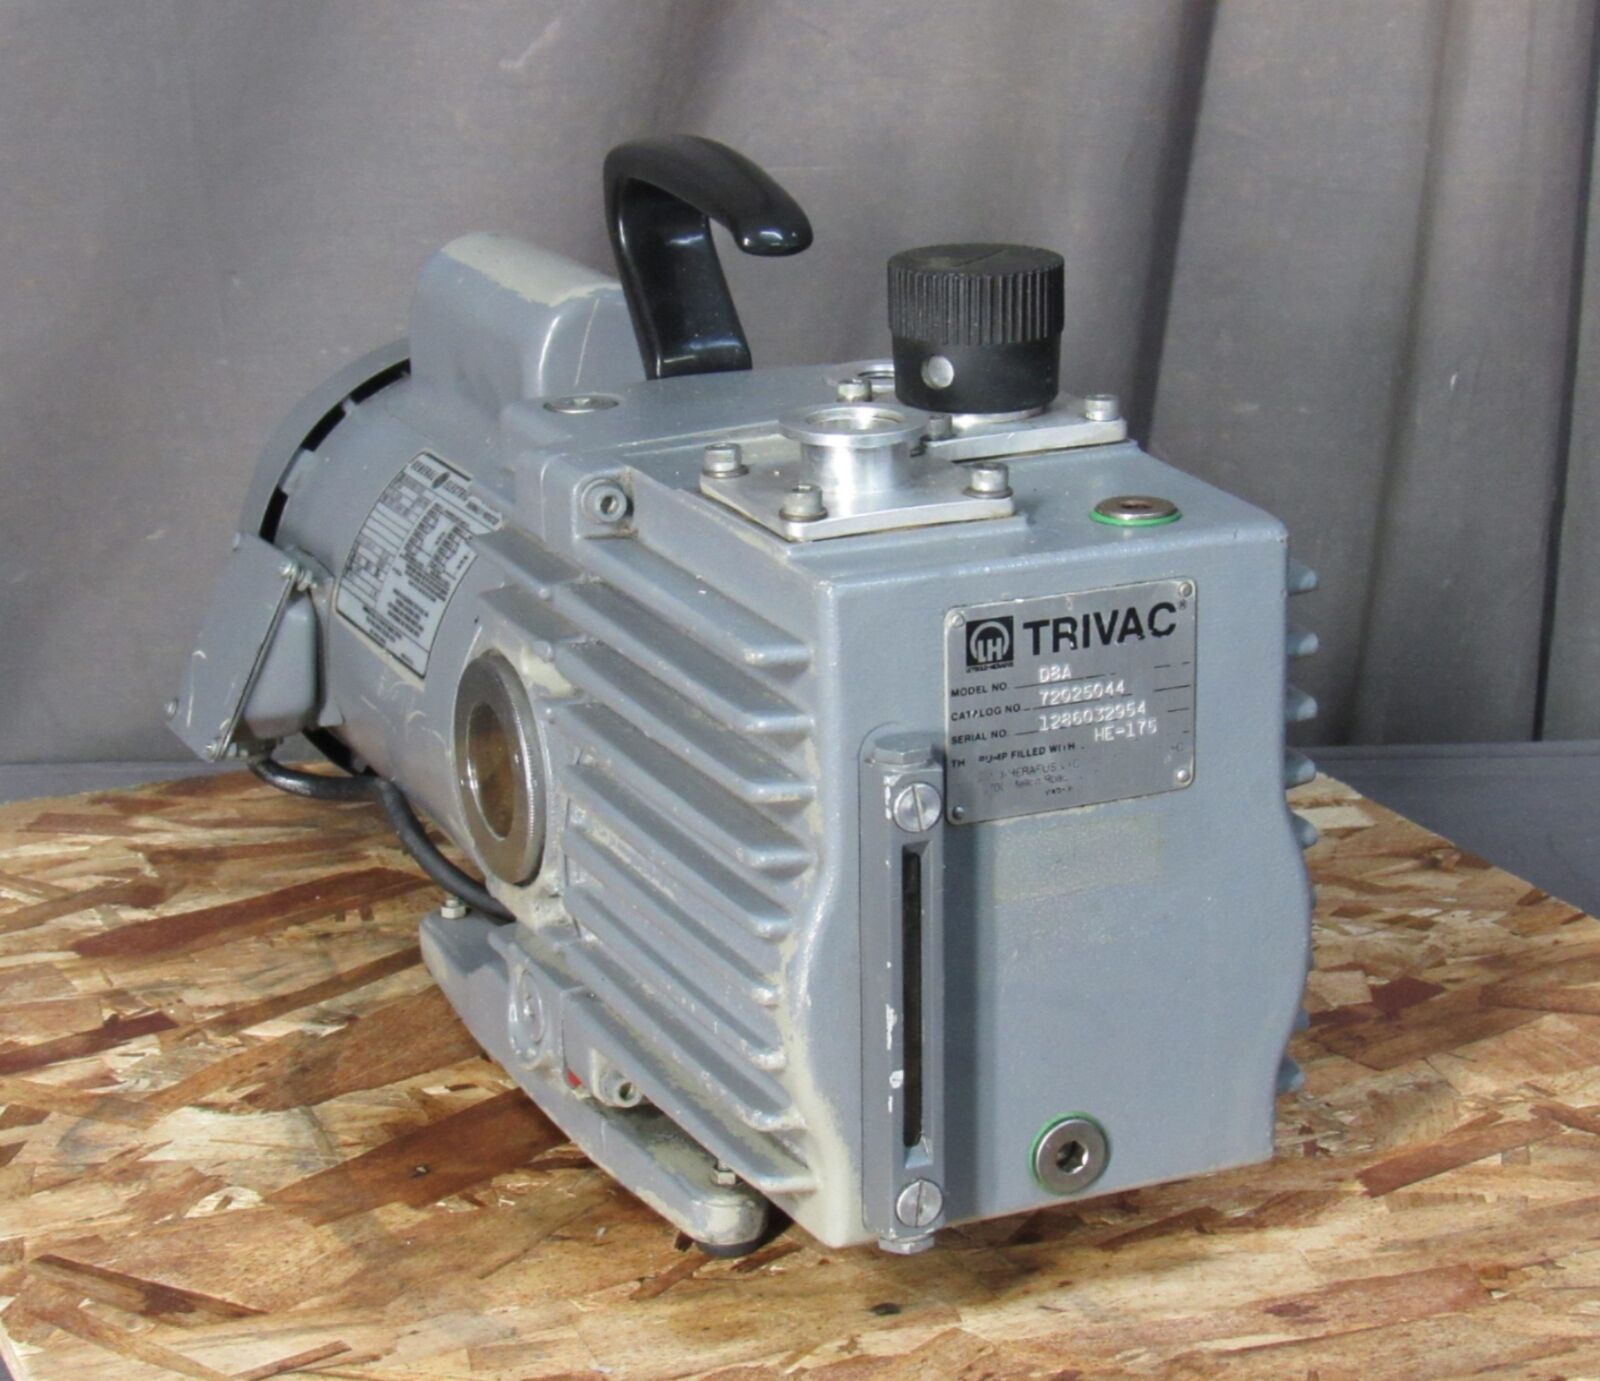 Leybold D8A Trivac Rotary Vane Vacuum Pump; 115/230V